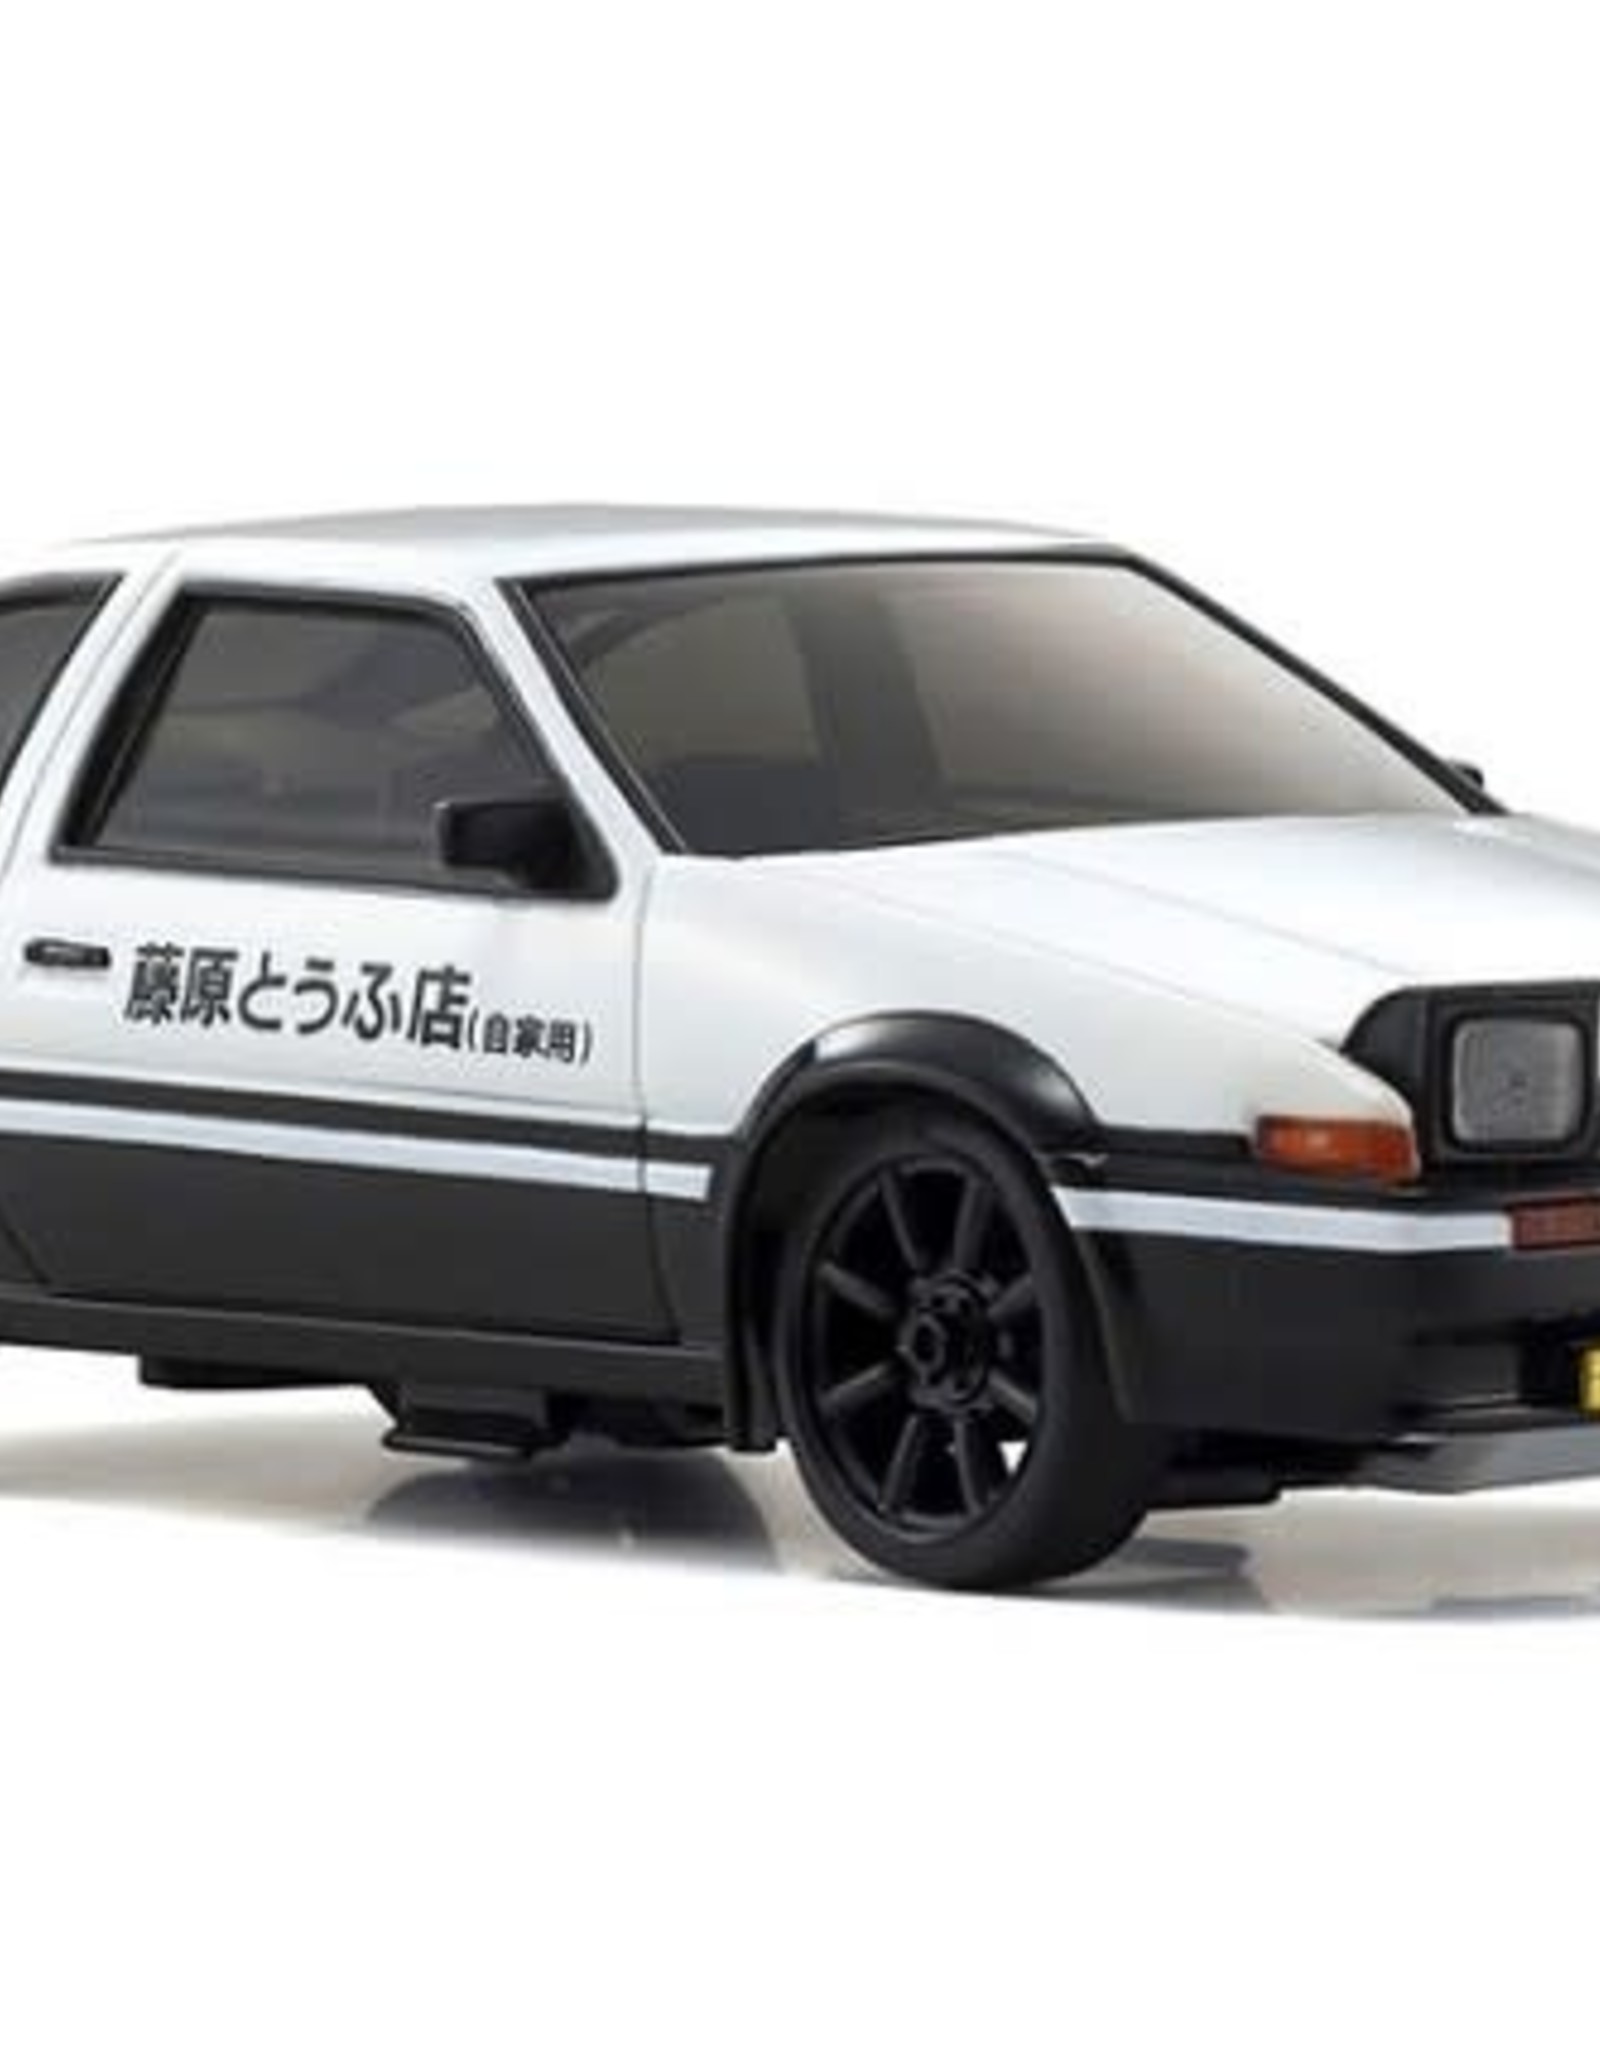 KYOSHO KYOMZQ101 Initial D Toyota Sprinter Trueno AE86 MZ Collection